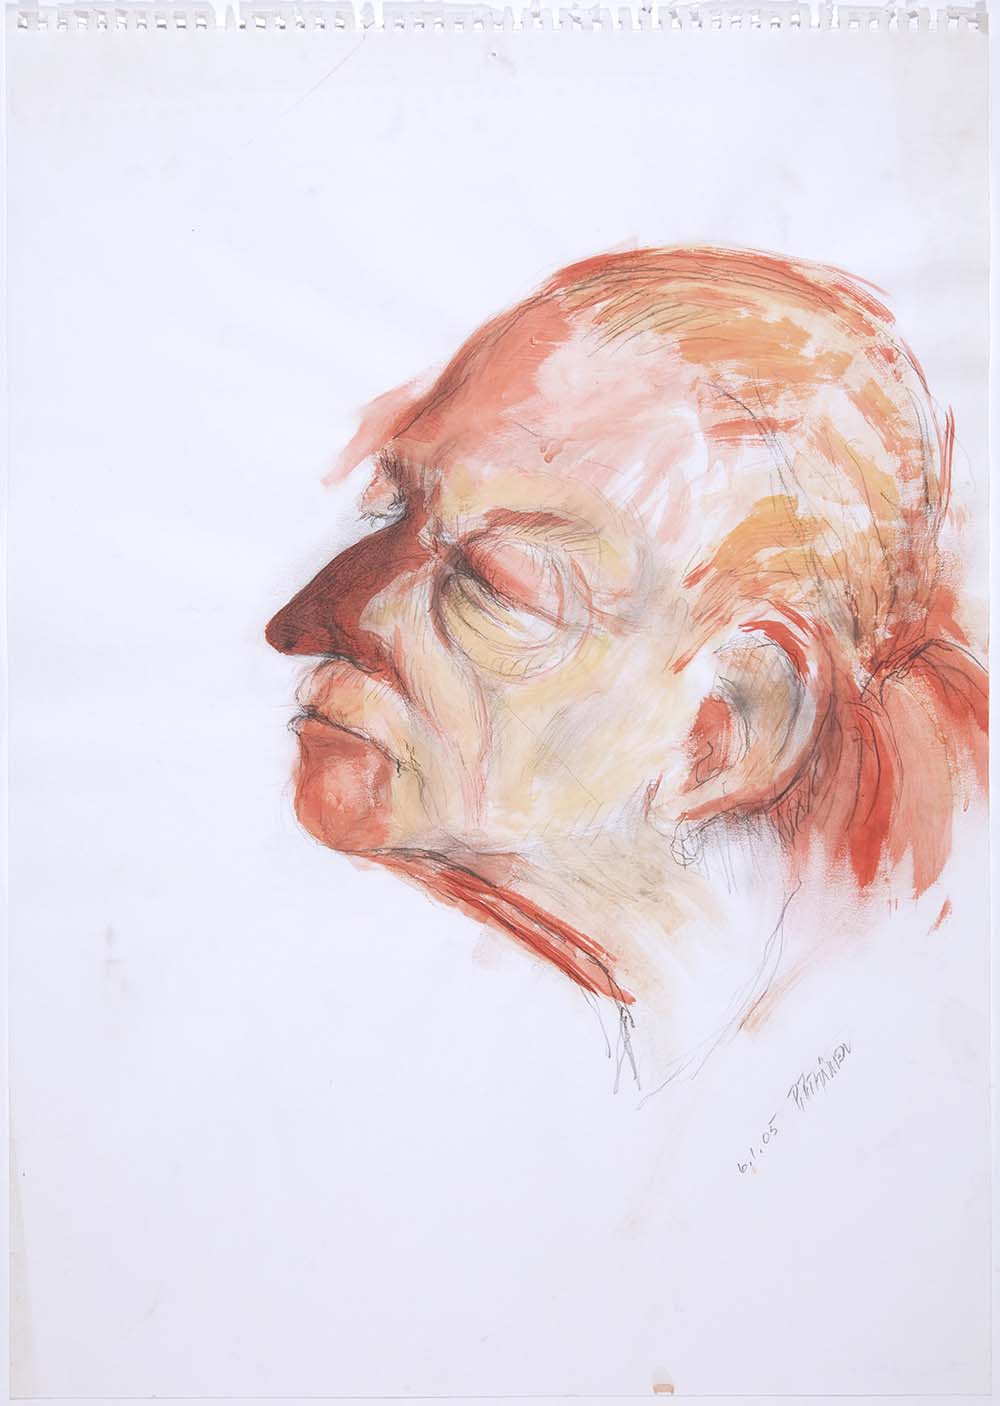 Pekka Pitkänen, Kain Tapper, 2005, blyerts, gouache på papper, 59 x 42 cm. Foto: Saara Salmi